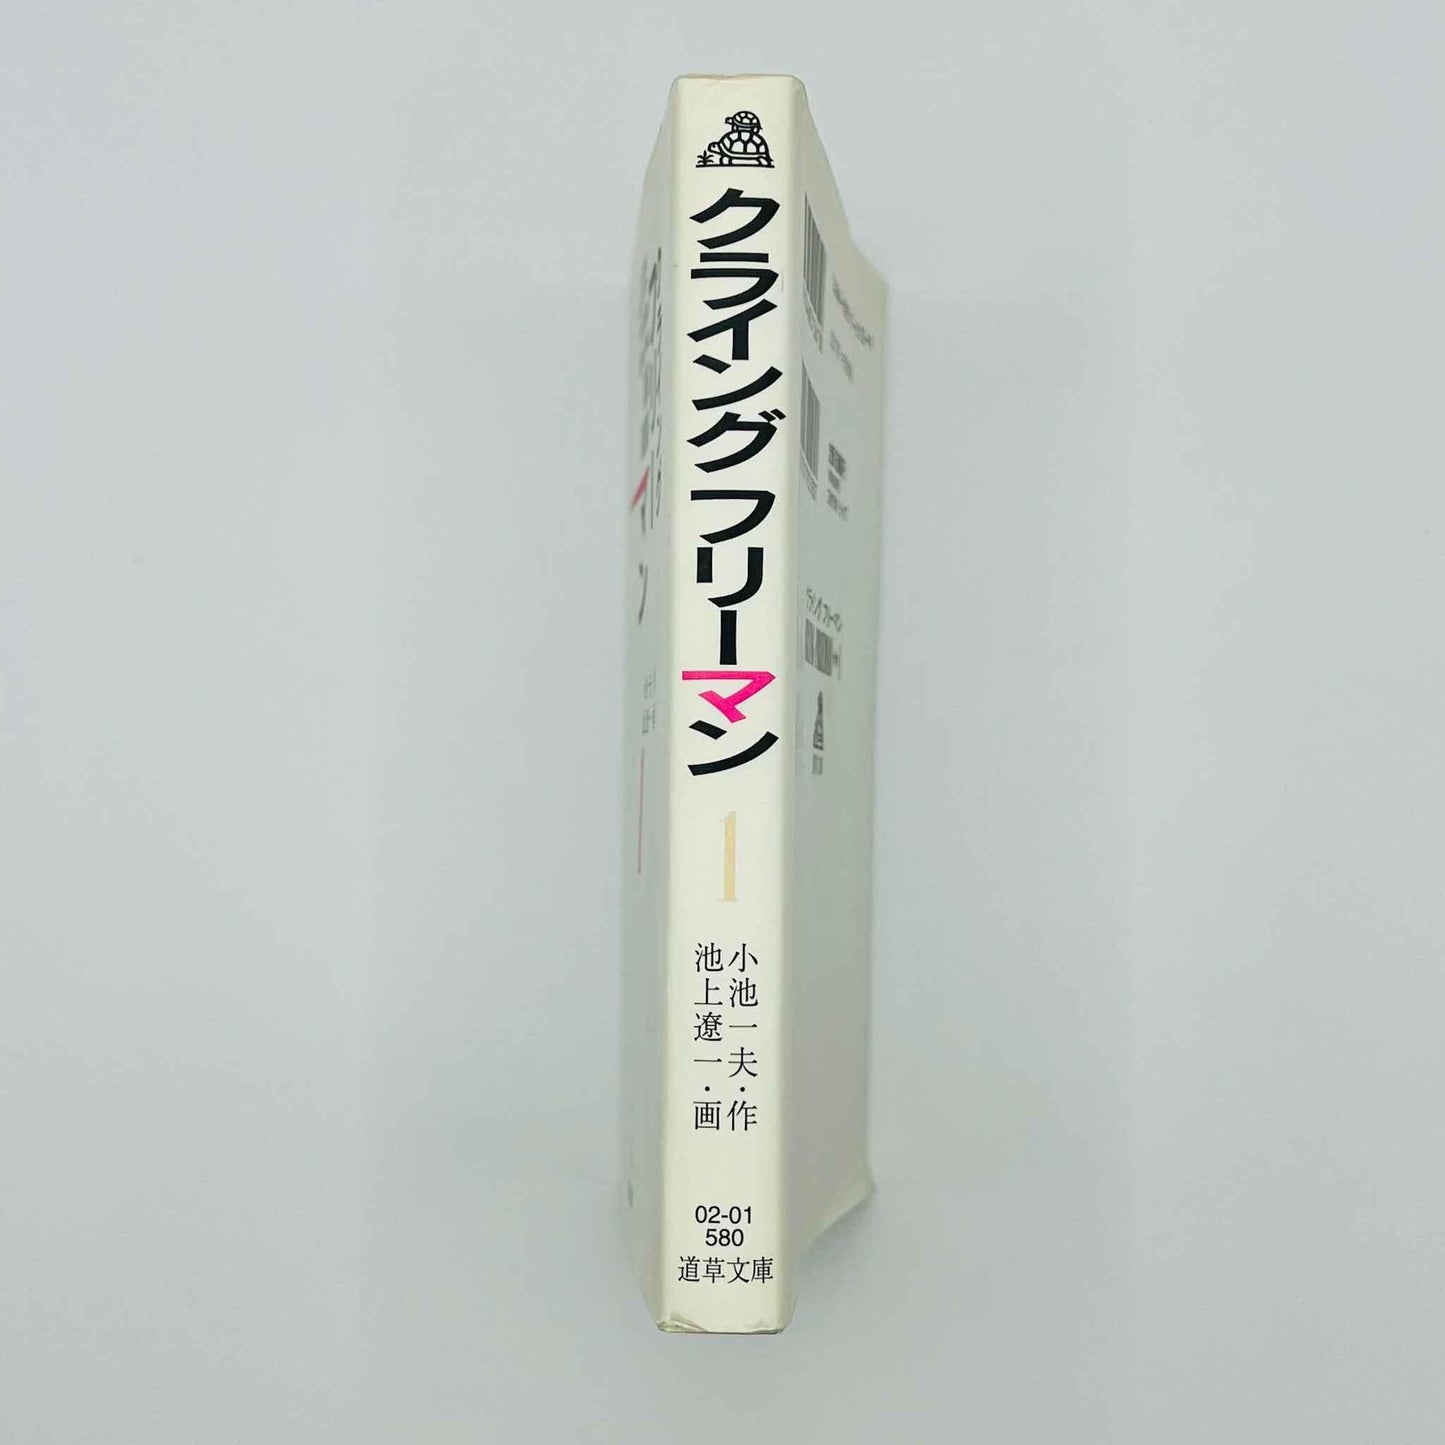 Crying Freeman (Pocket Edition) - Volume 01 - 1stPrint.net - 1st First Print Edition Manga Store - M-FREEM-01-001